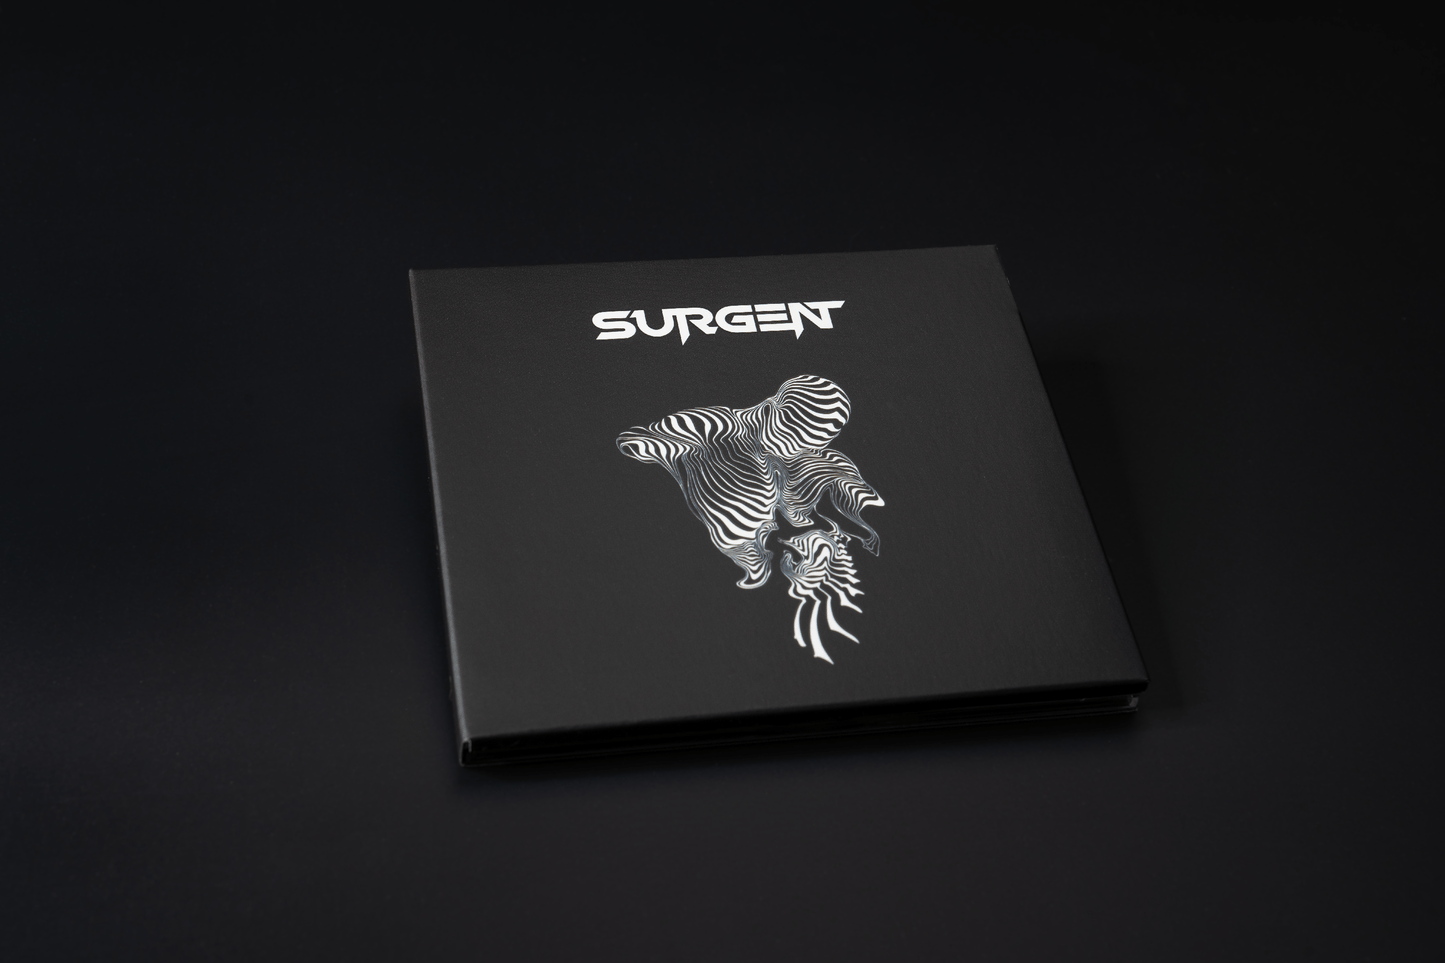 Surgent - "Surgent" CD Digipak